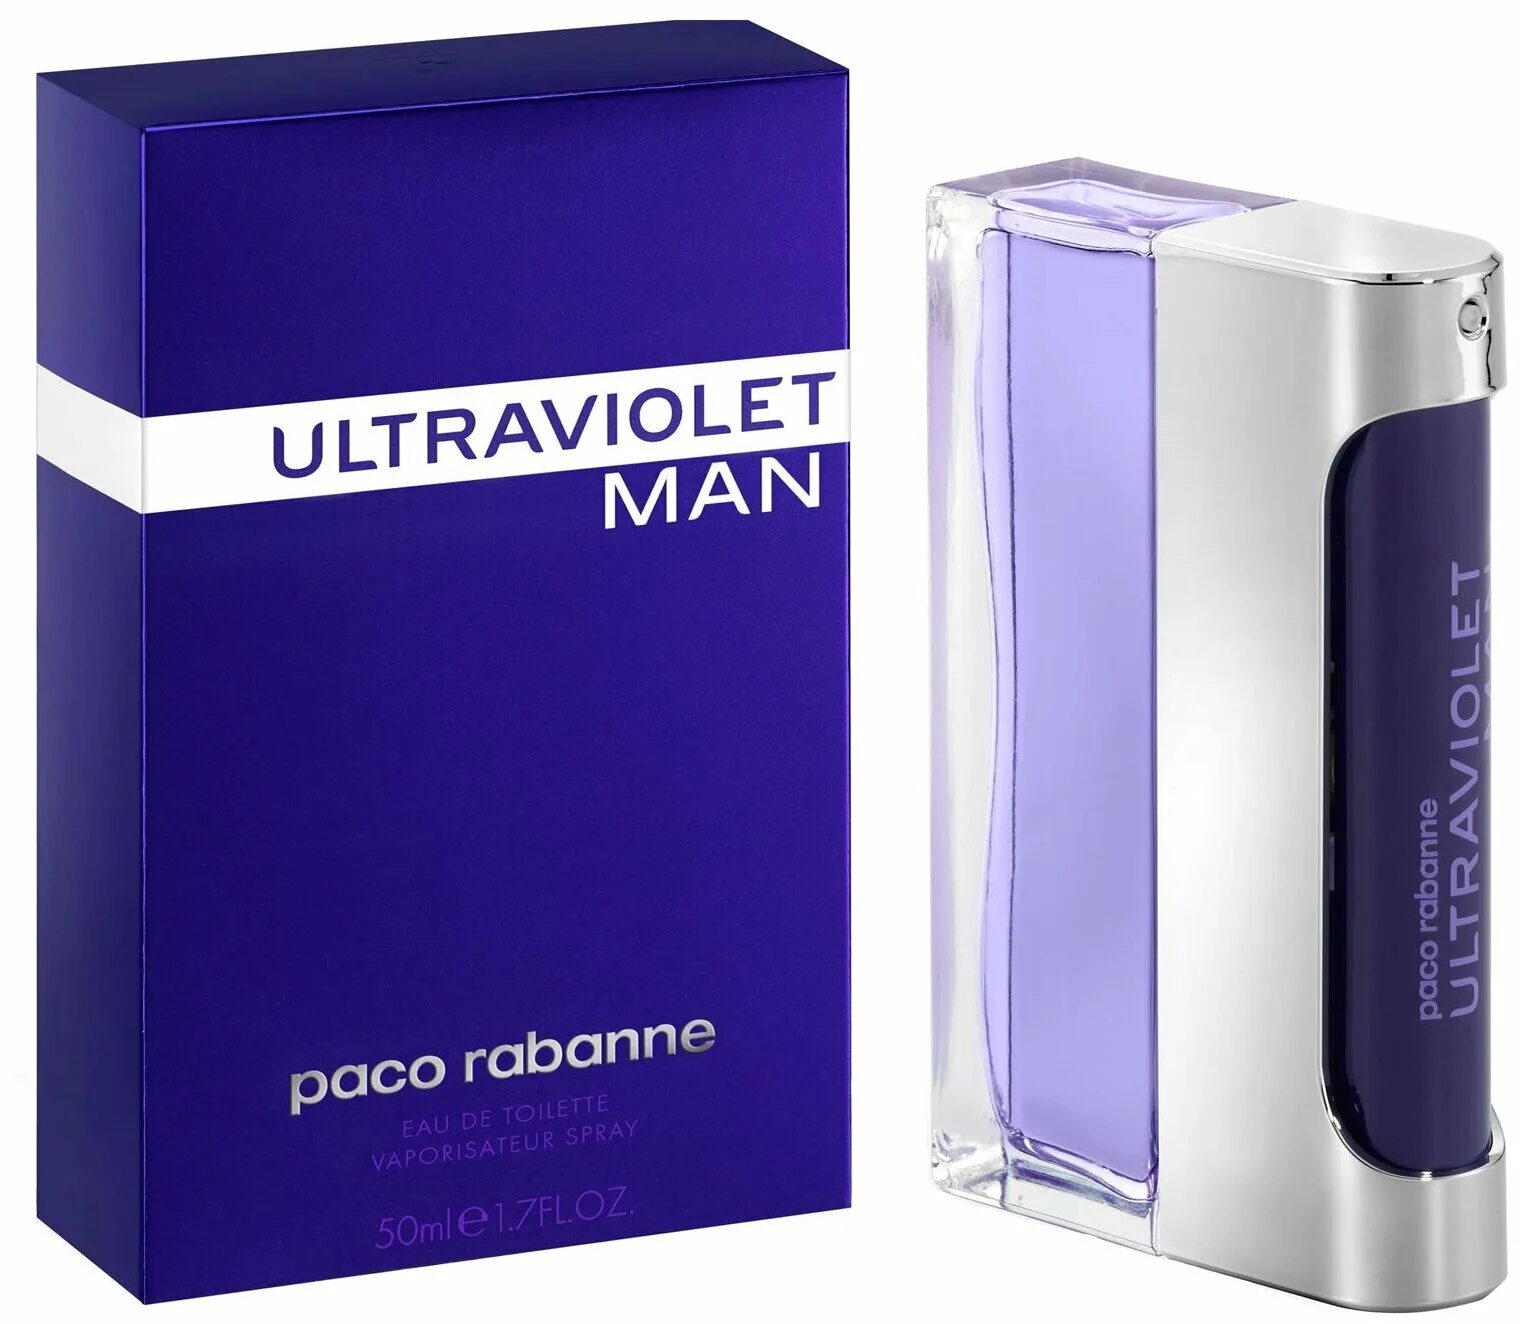 Paco Rabanne Ultraviolet men. Paco Rabanne Ultraviolet 50 ml. Paco Rabanne Ultraviolet man 50ml (m). Ultraviolet Paco Rabanne мужские. Туалетная вода мужская спб